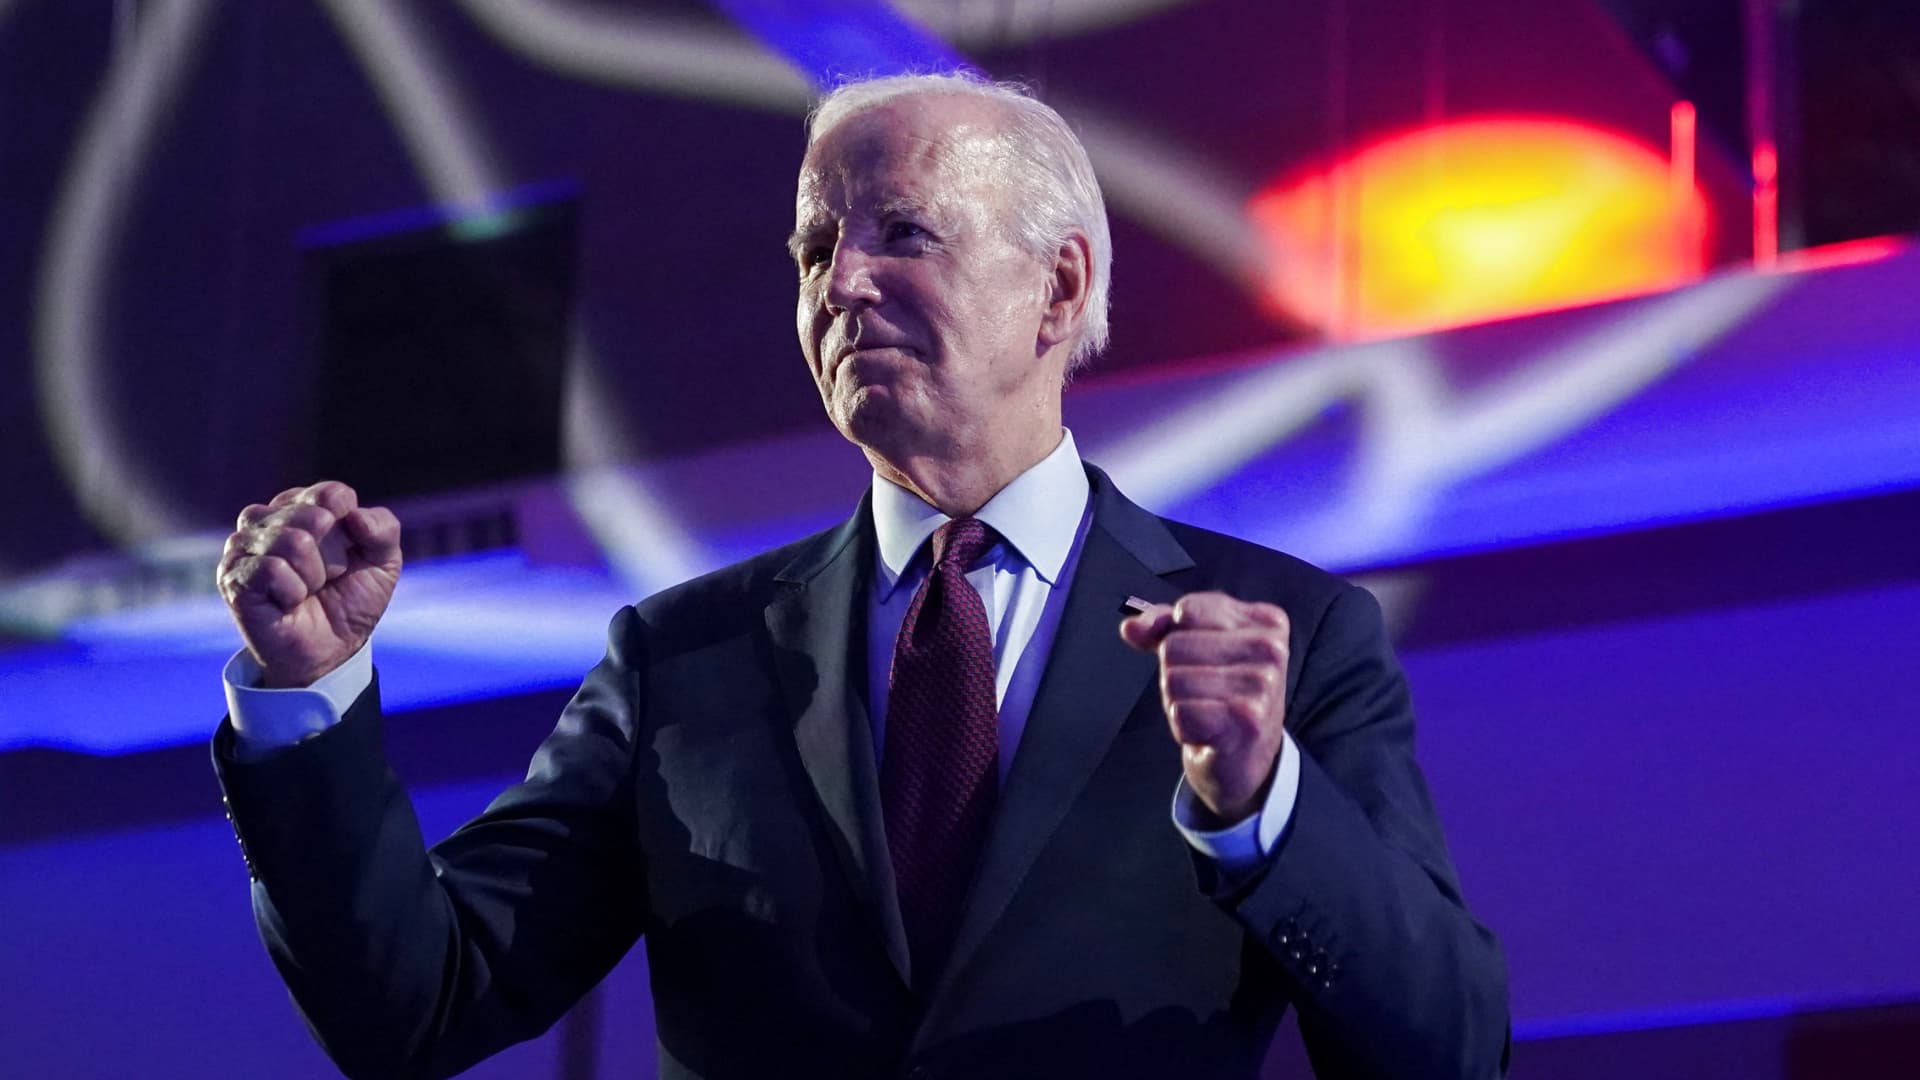 Biden wins Nevada Democratic main, NBC News projects